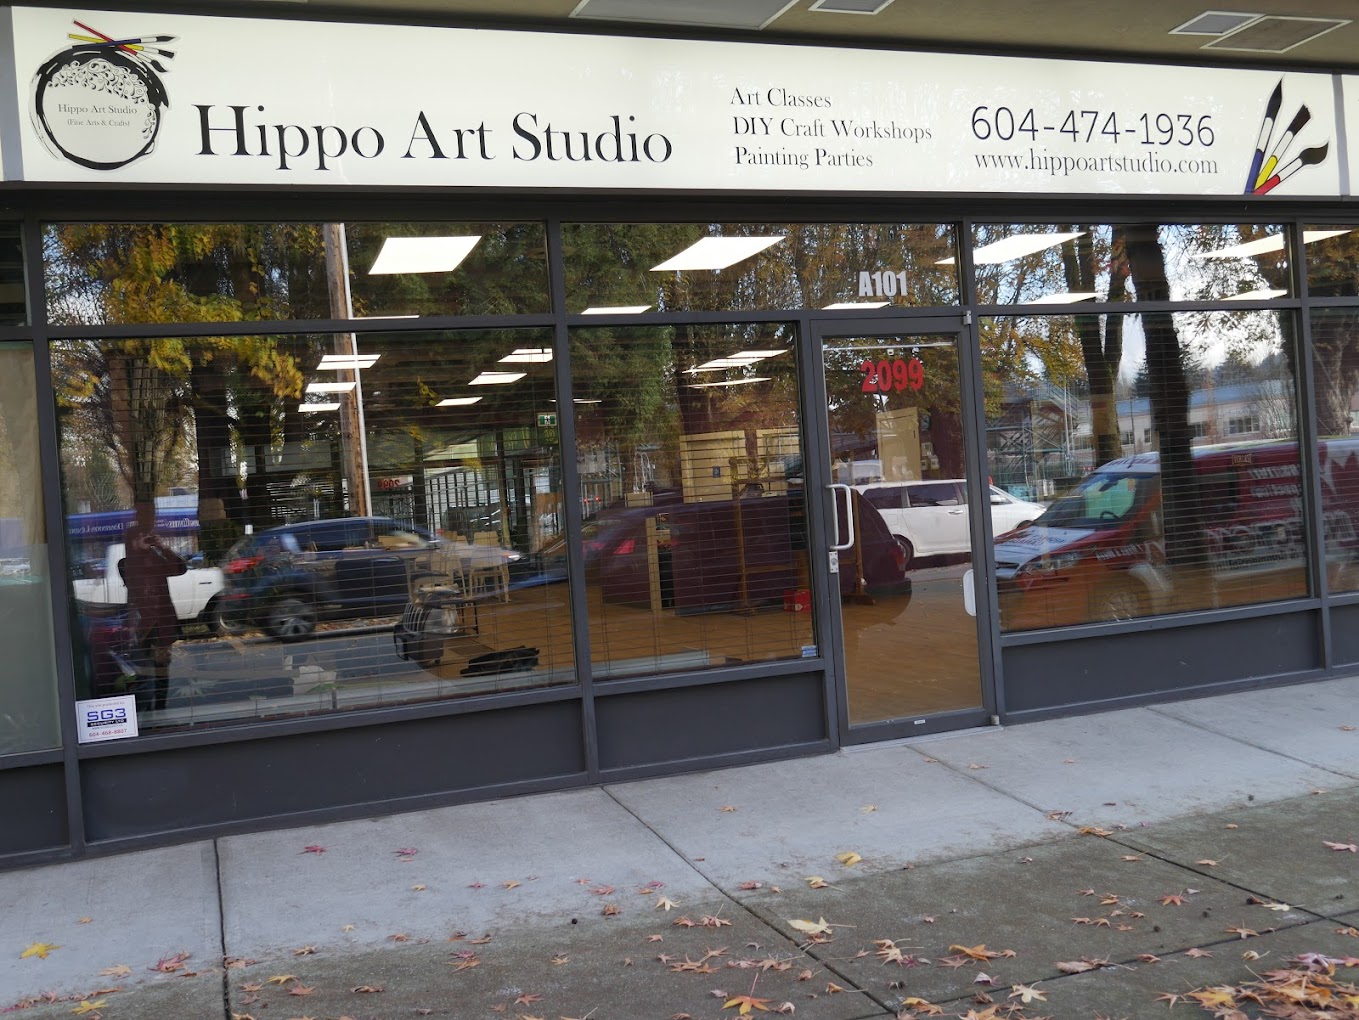 Street view of the Hippo Arts Studio entrance